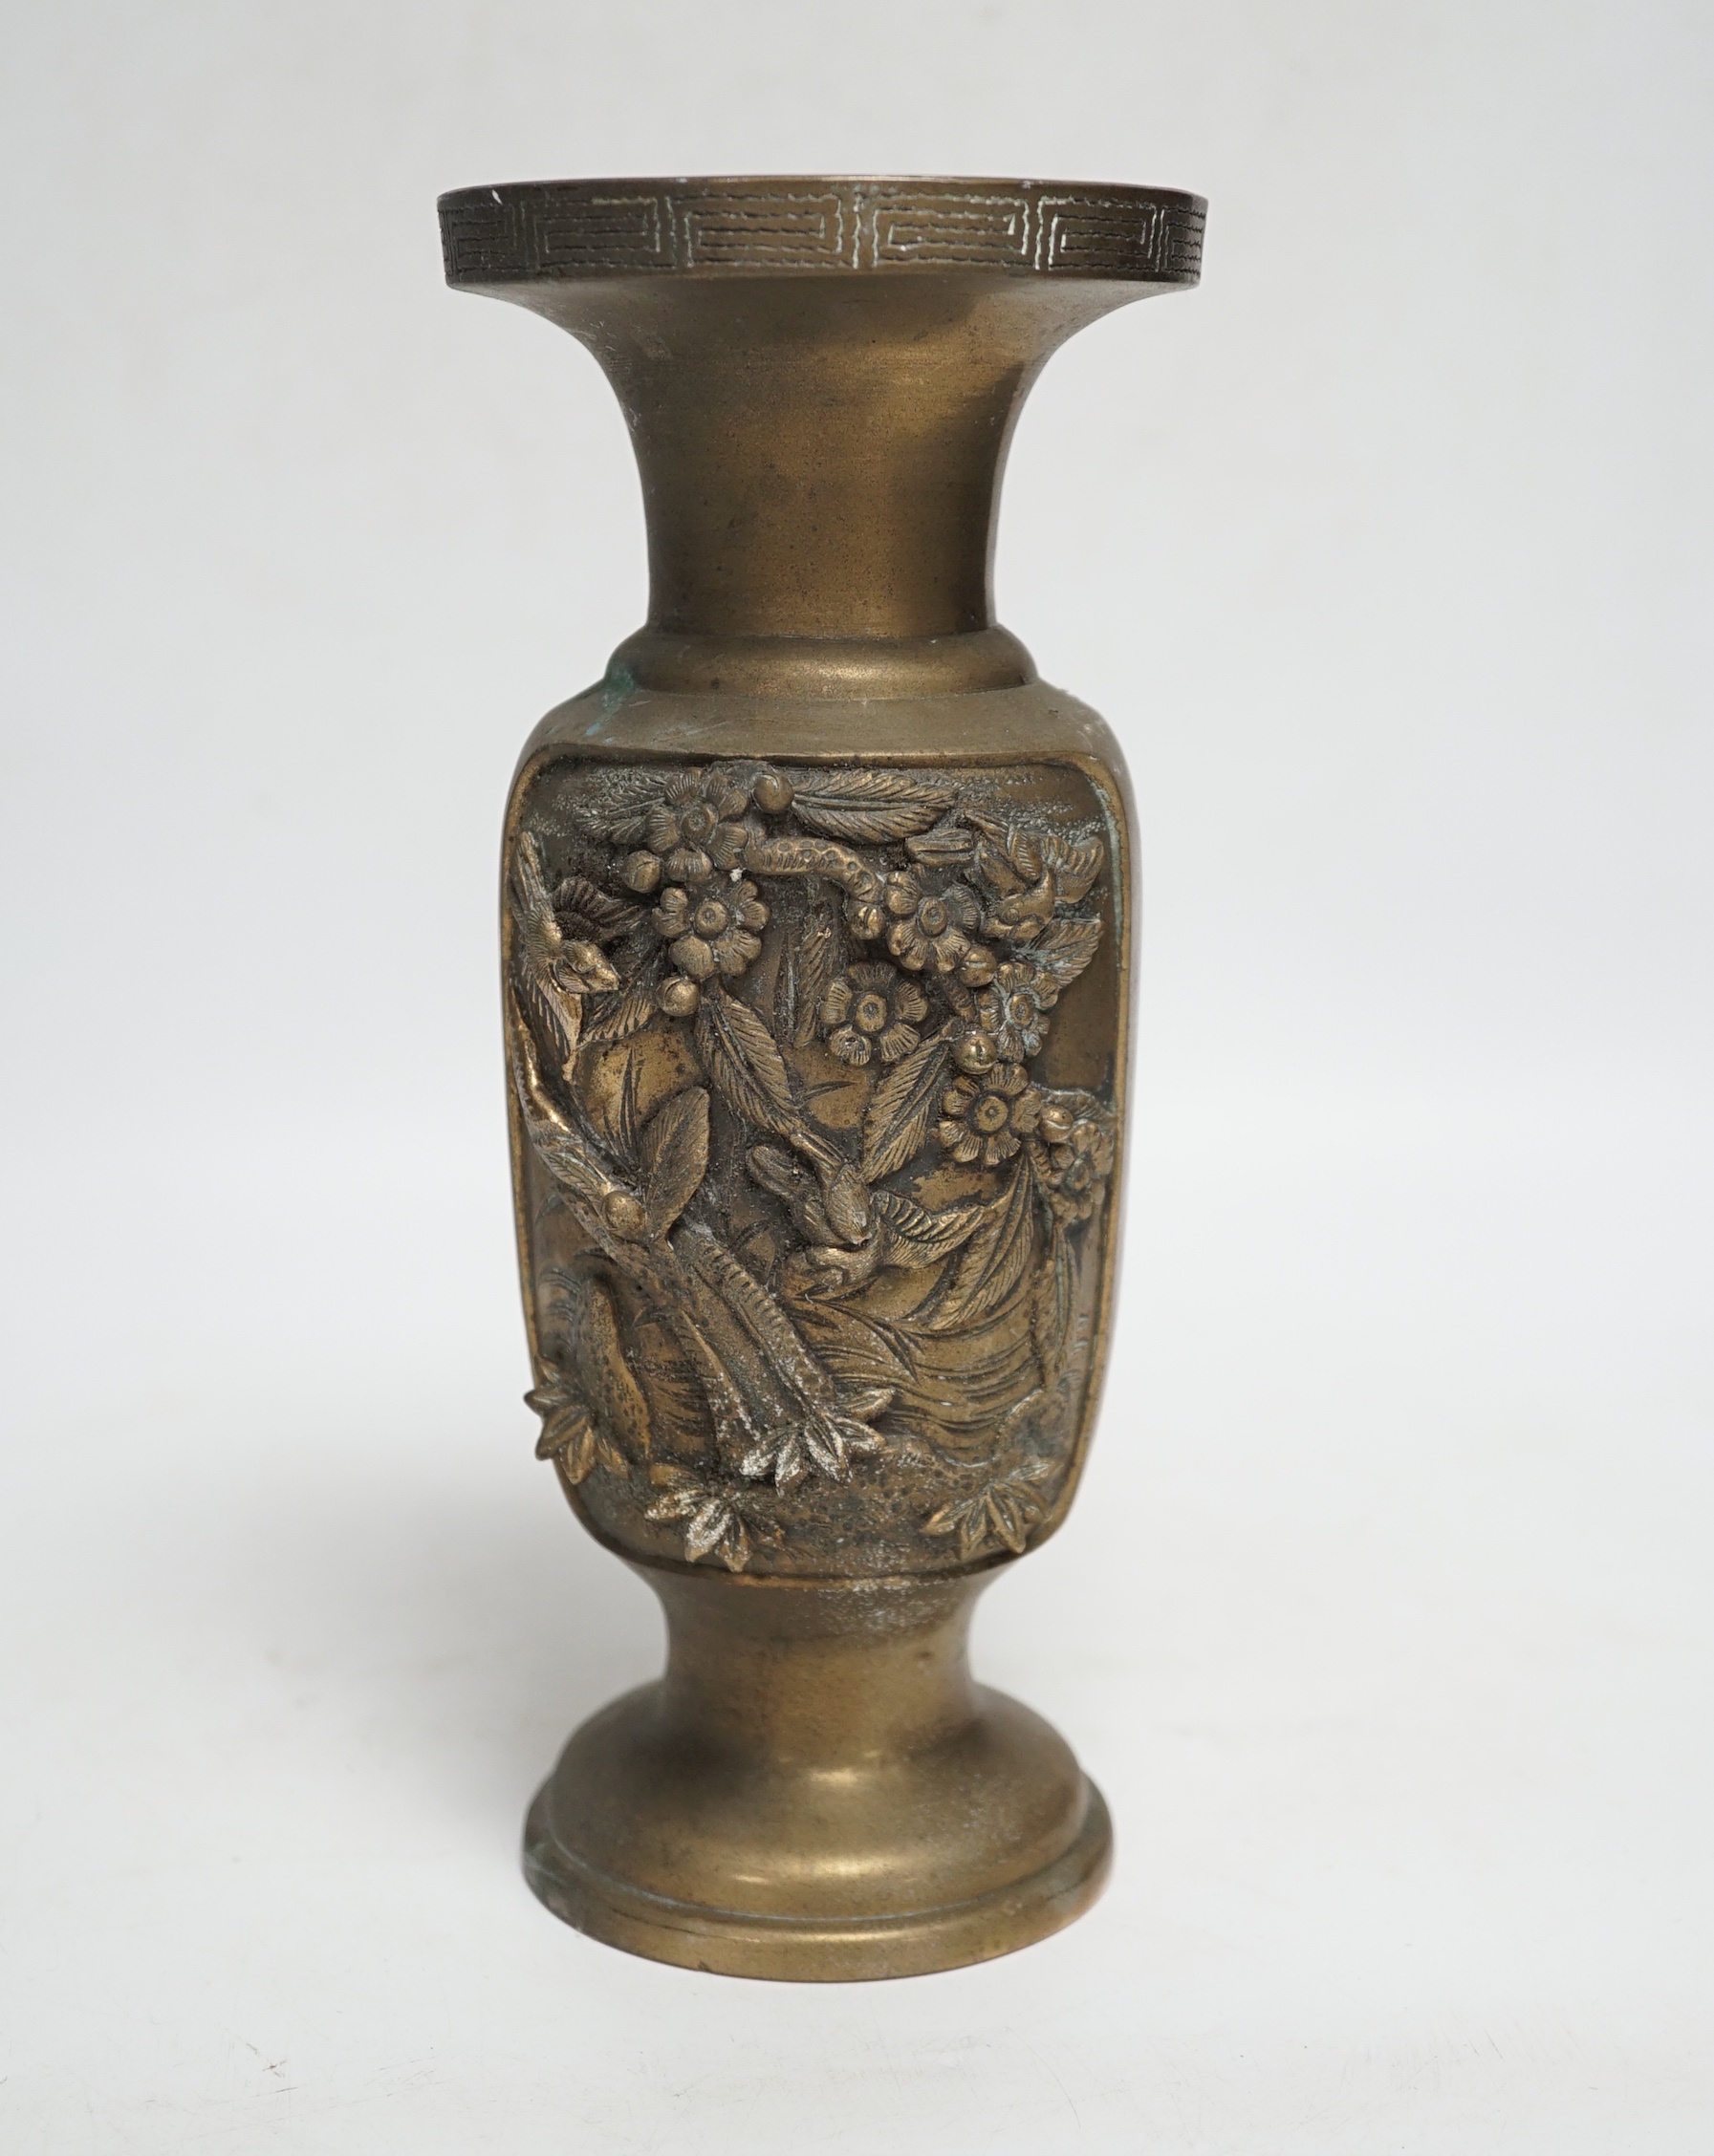 A Japanese cast bronze vase, 23.5cm